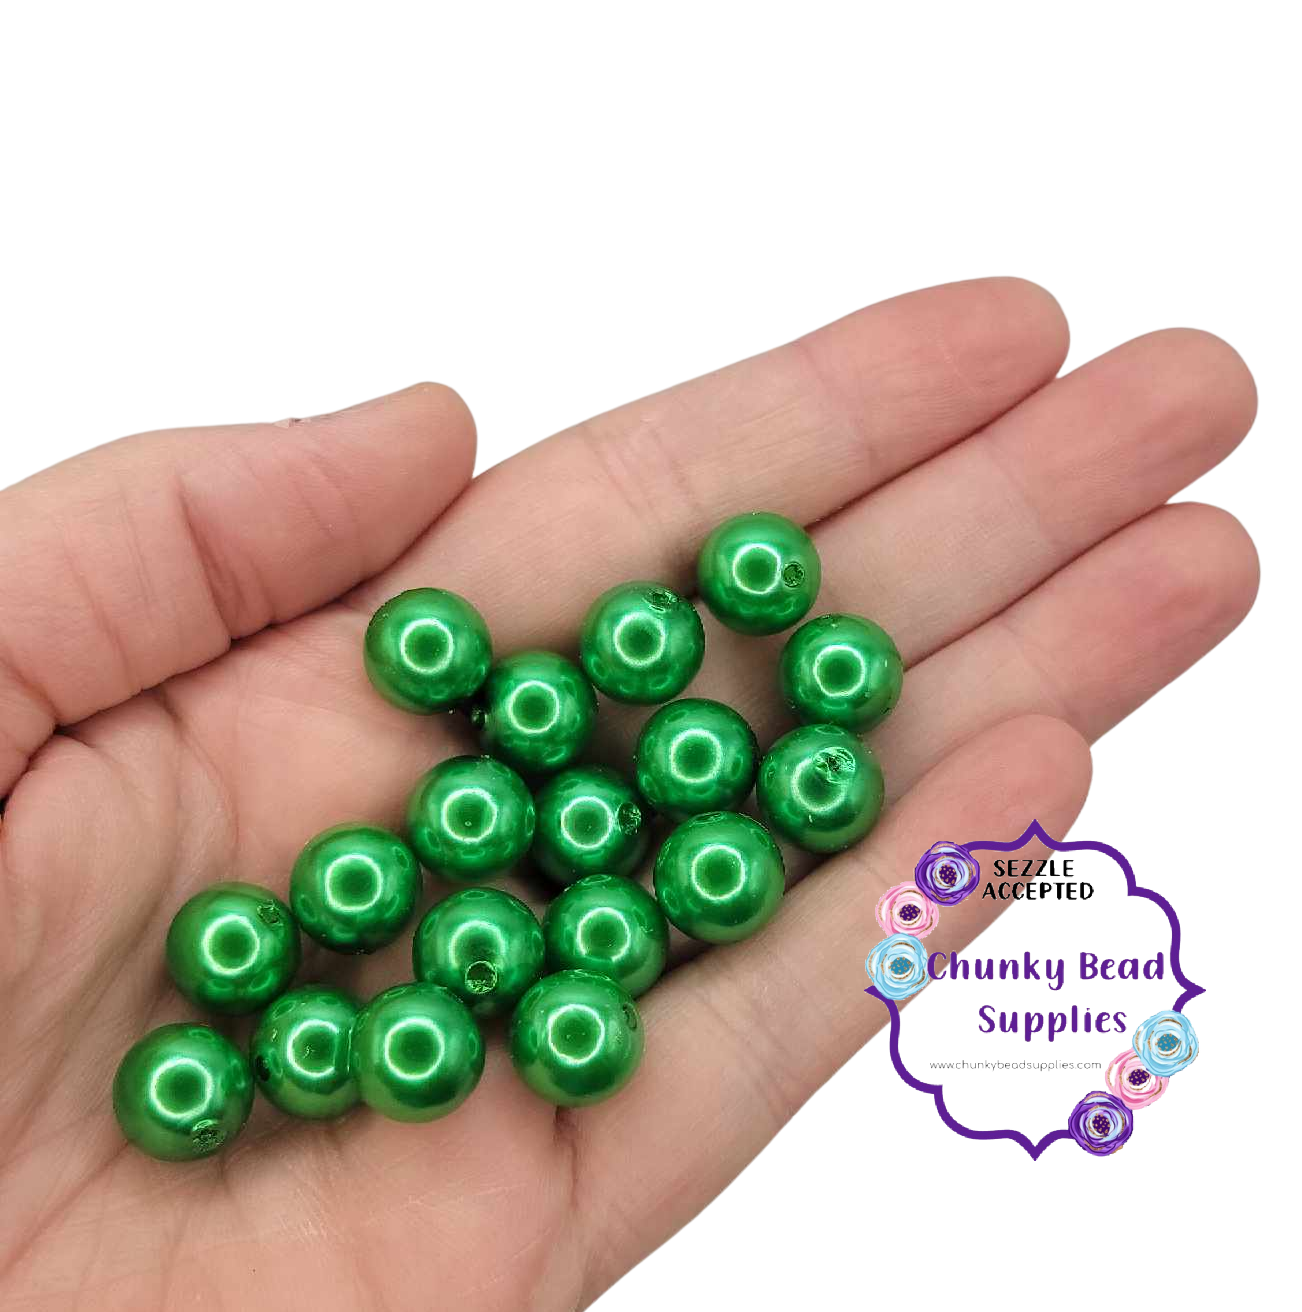 12mm "Green" Acrylic Pearls